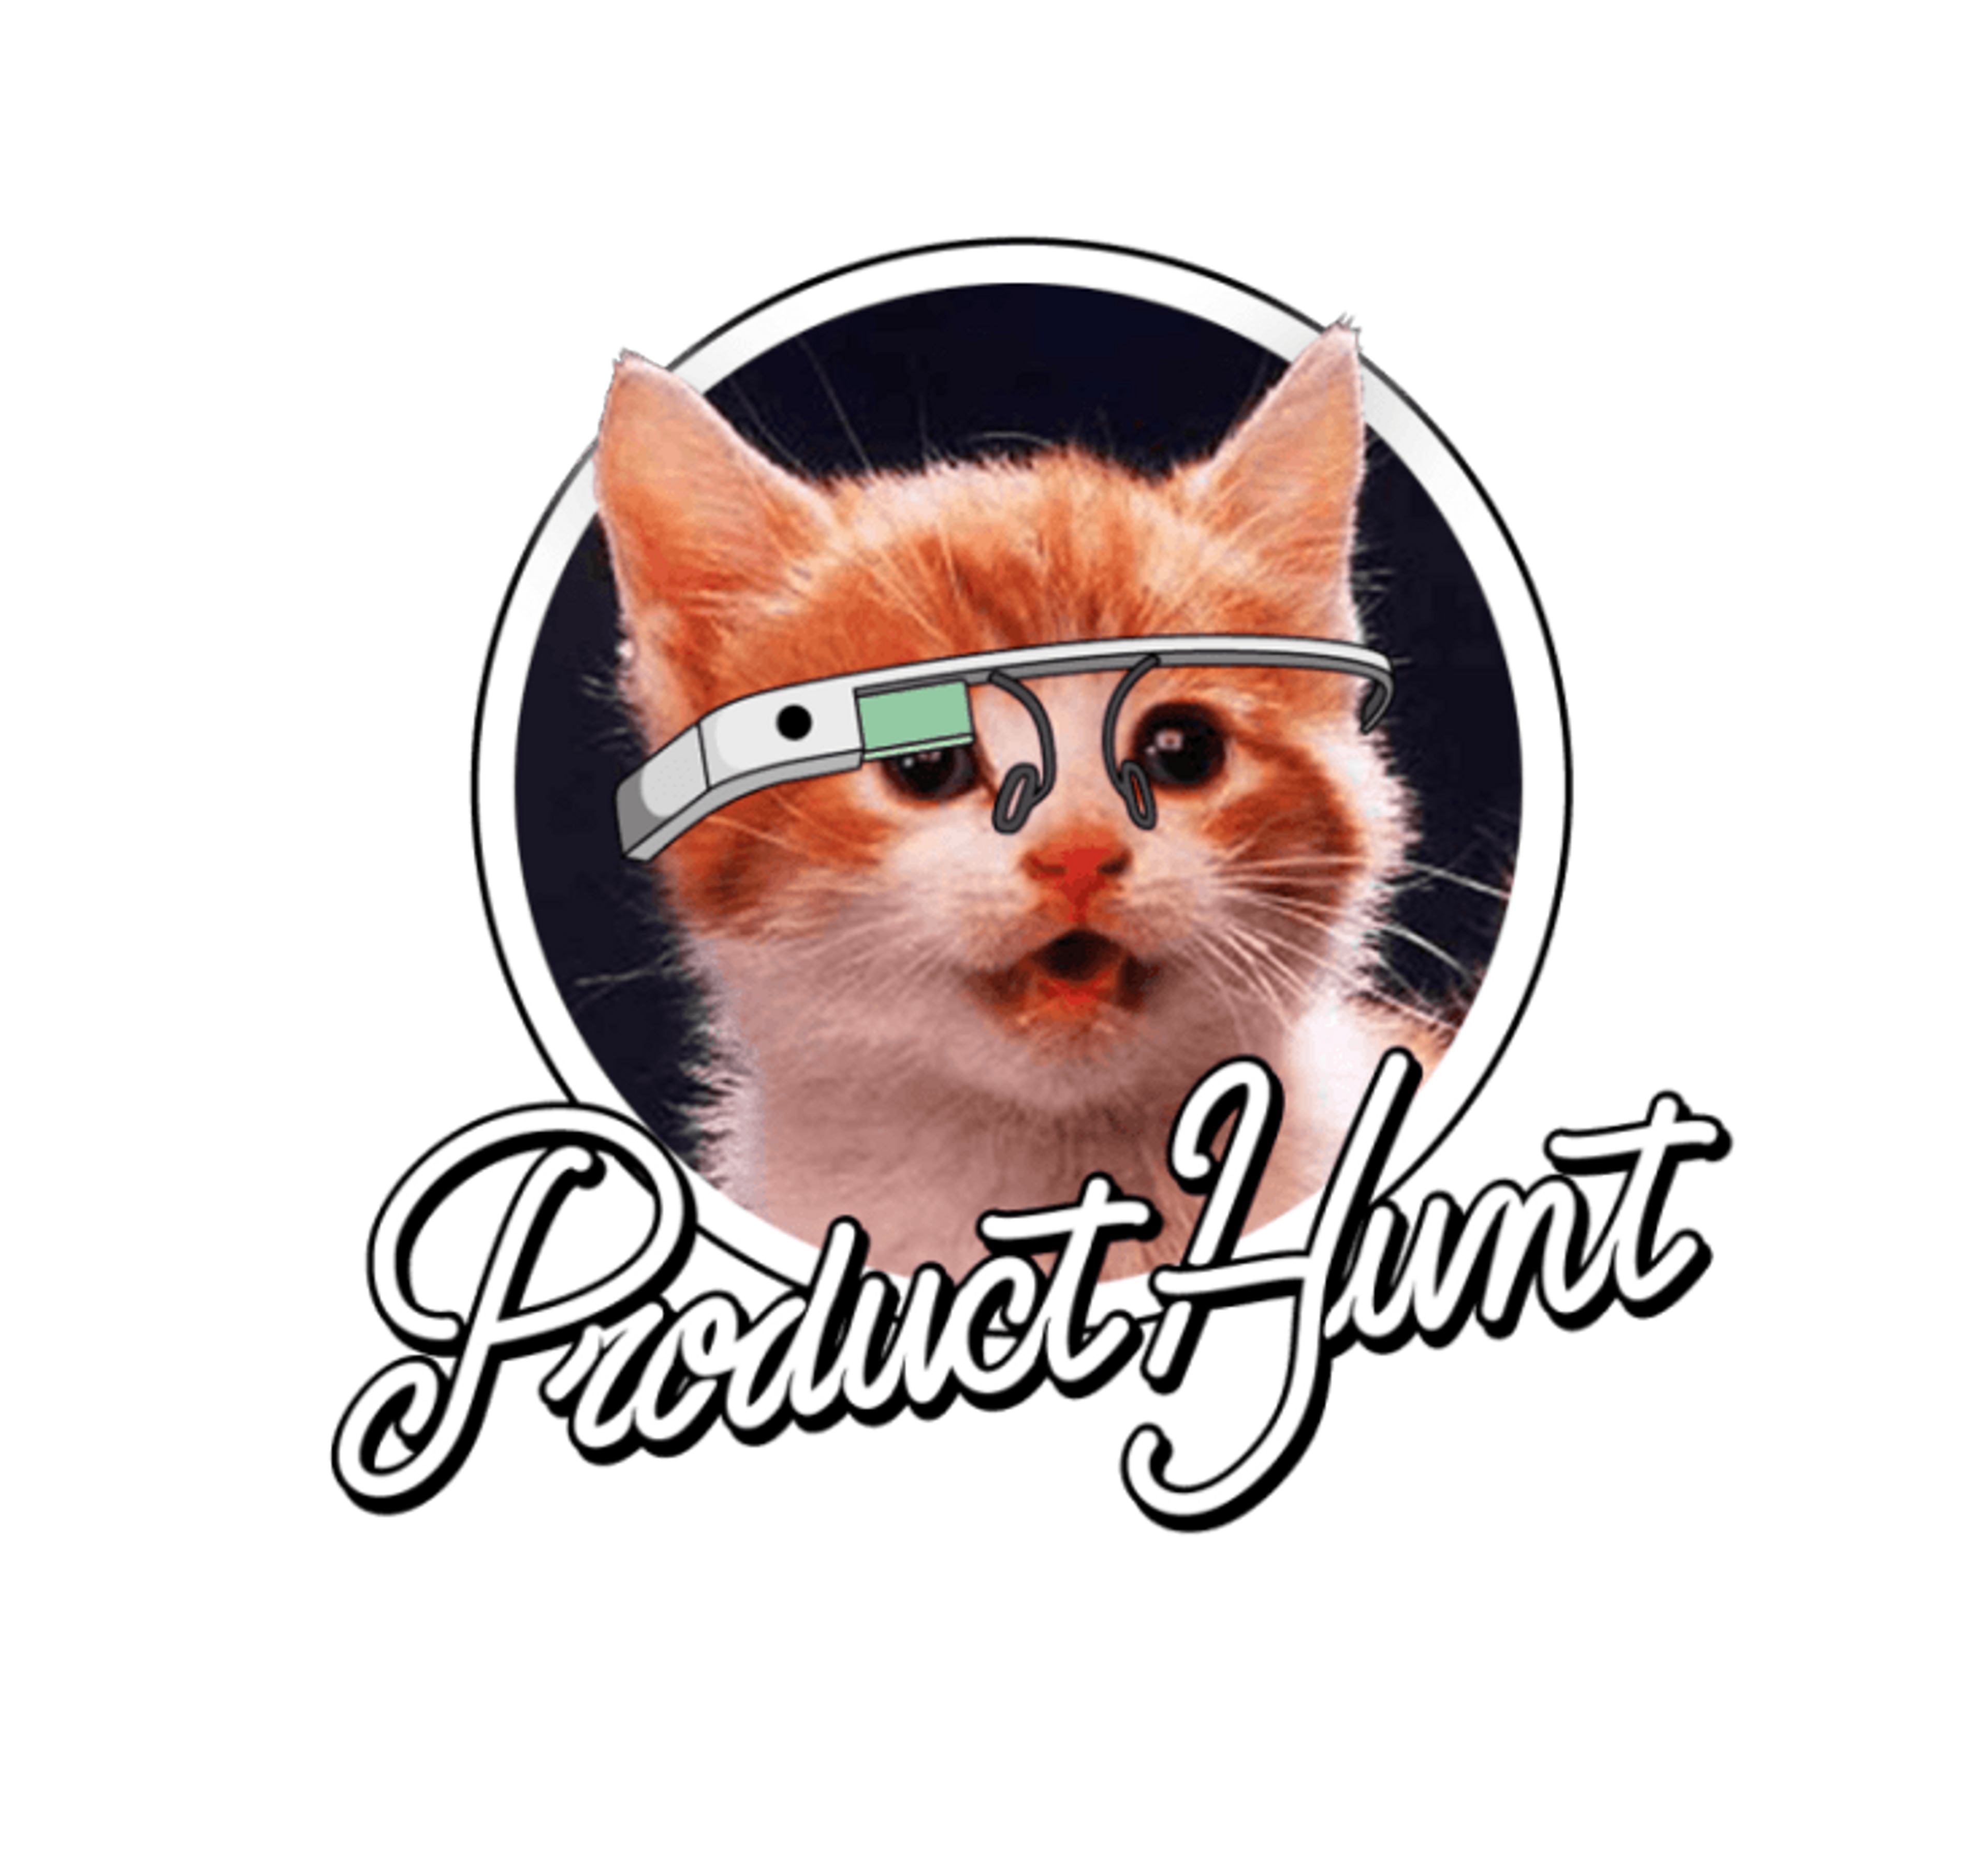 Product Hunt logo PNG